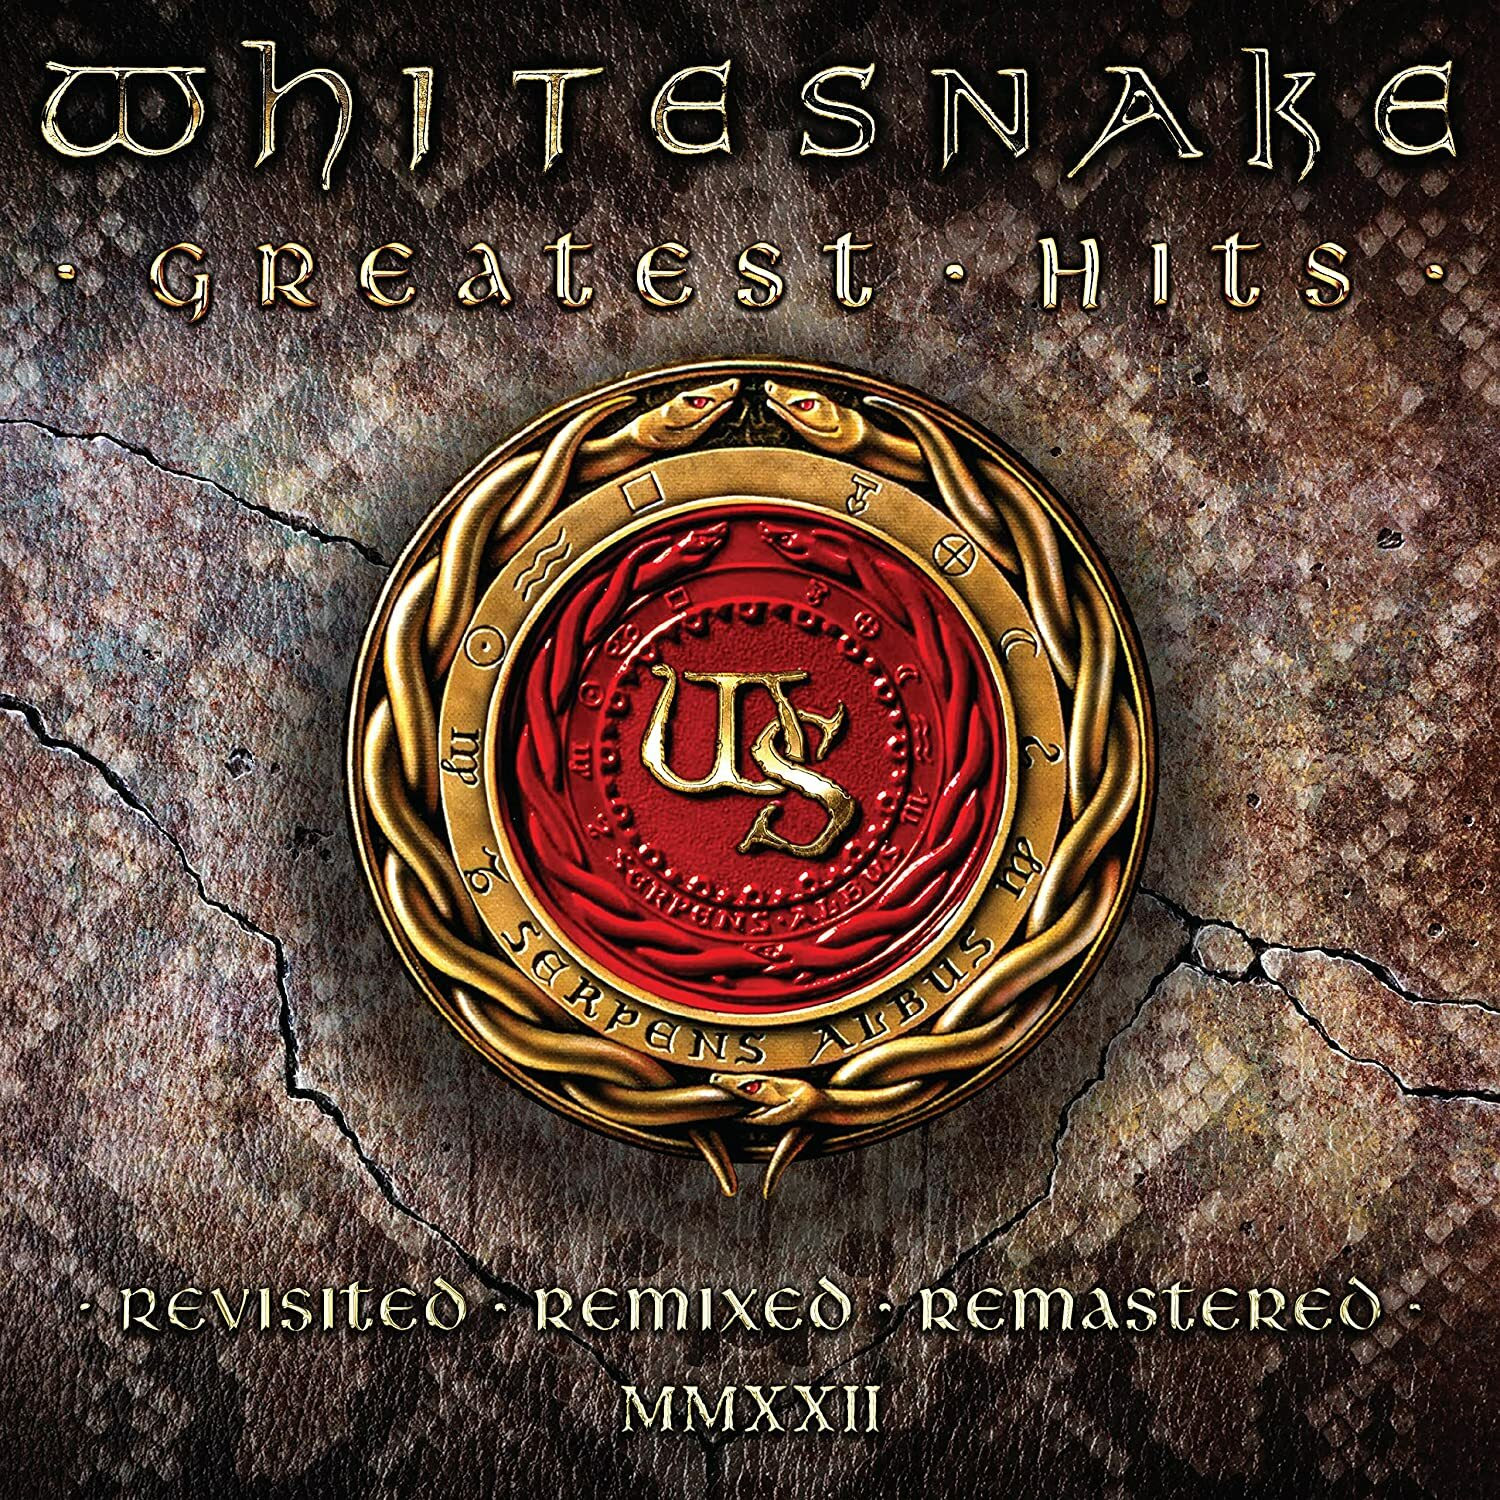 Whitesnake Greatest Hits Revisited, Remixed, Remastered.